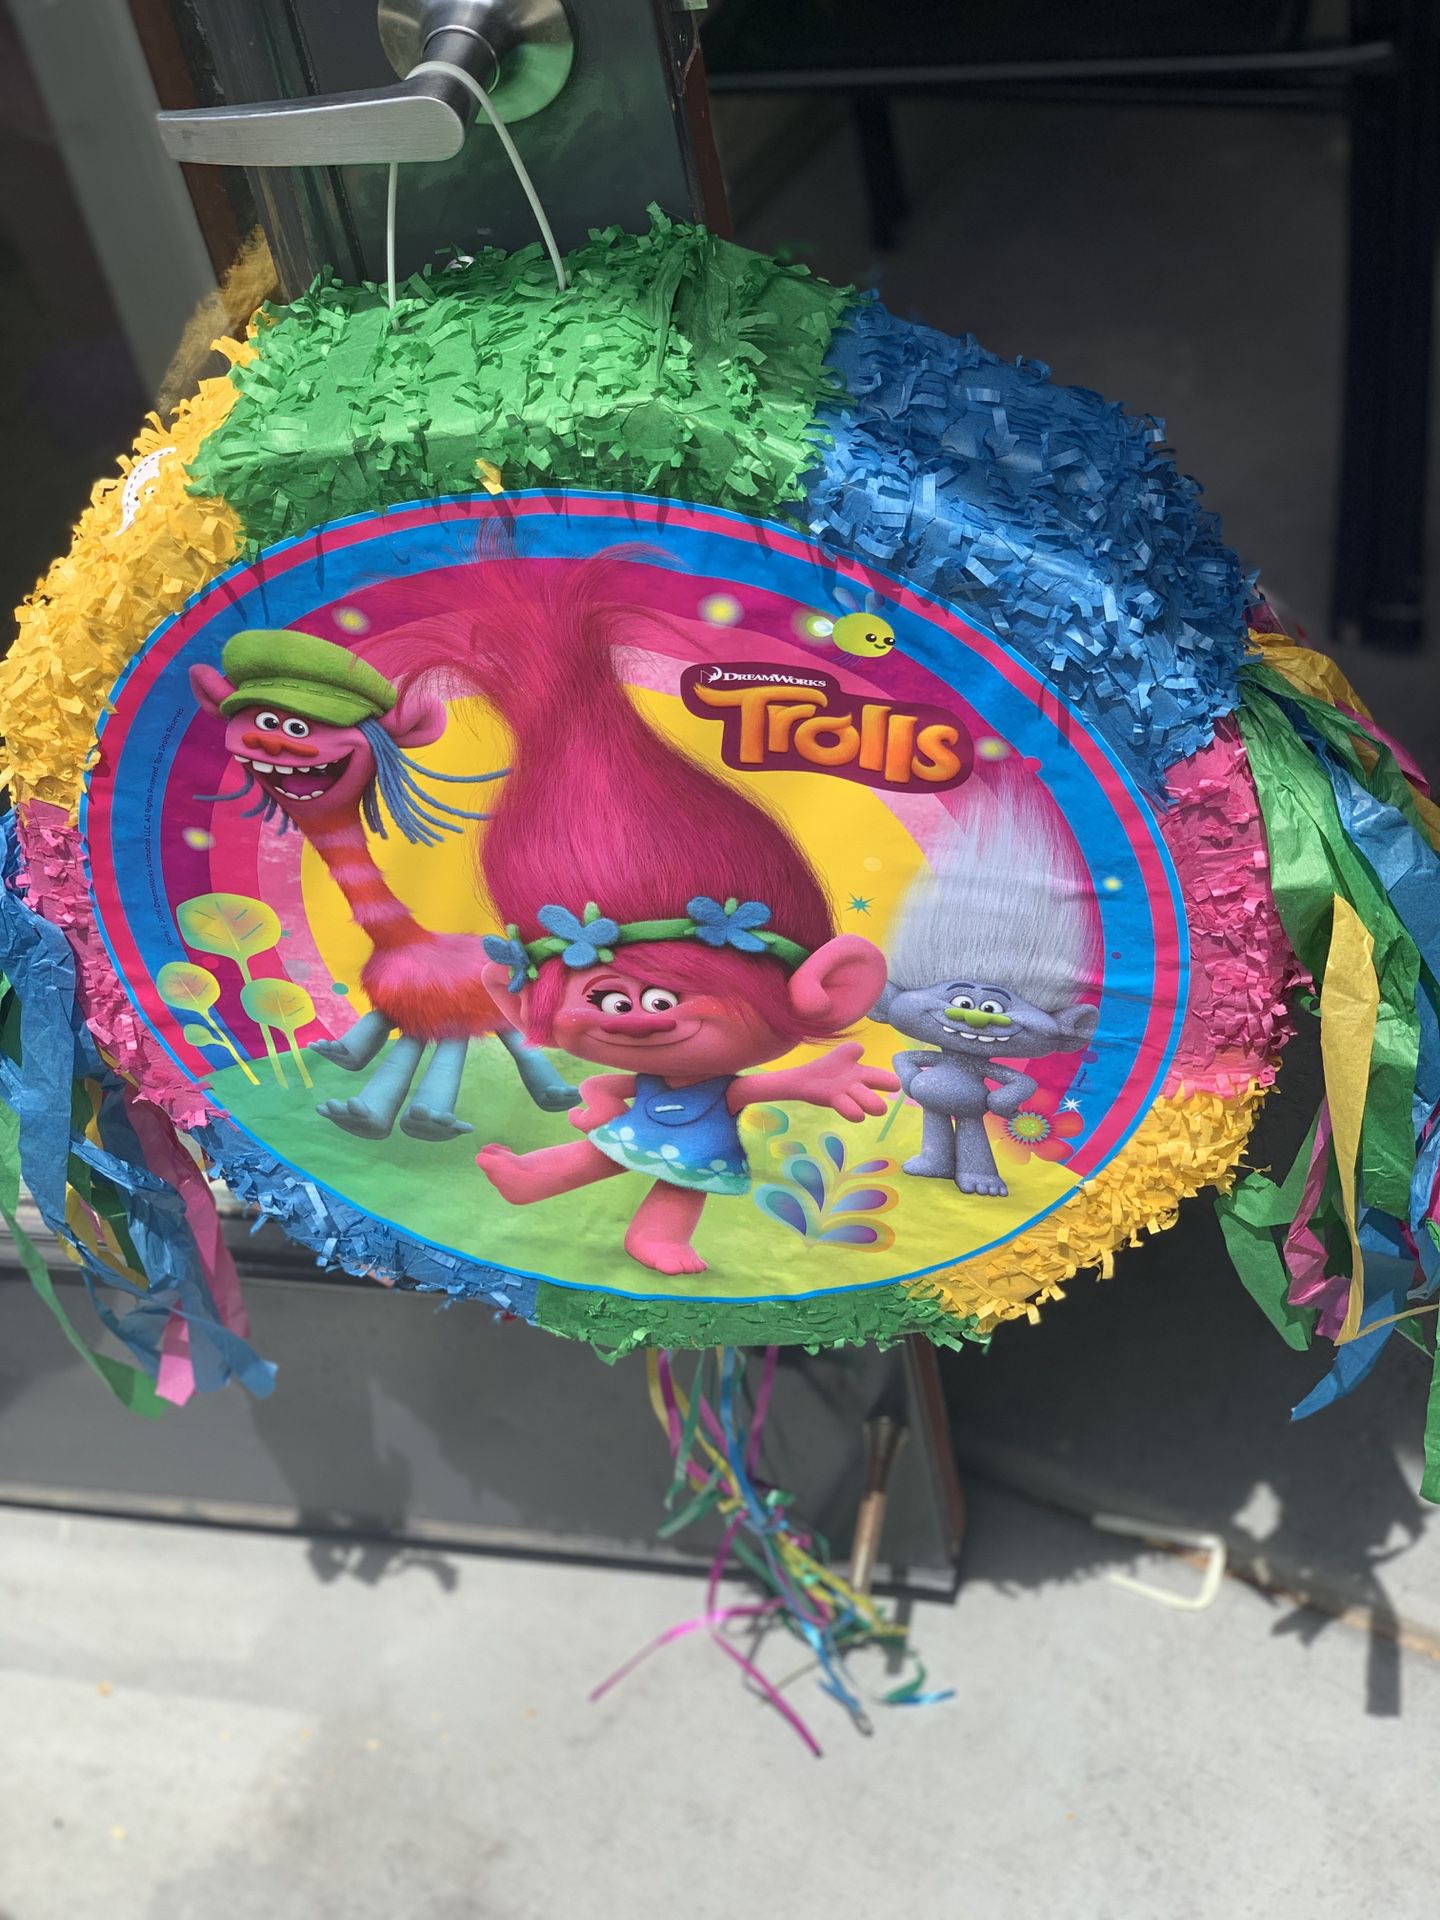 Trolls Piñata decorations / party supplies